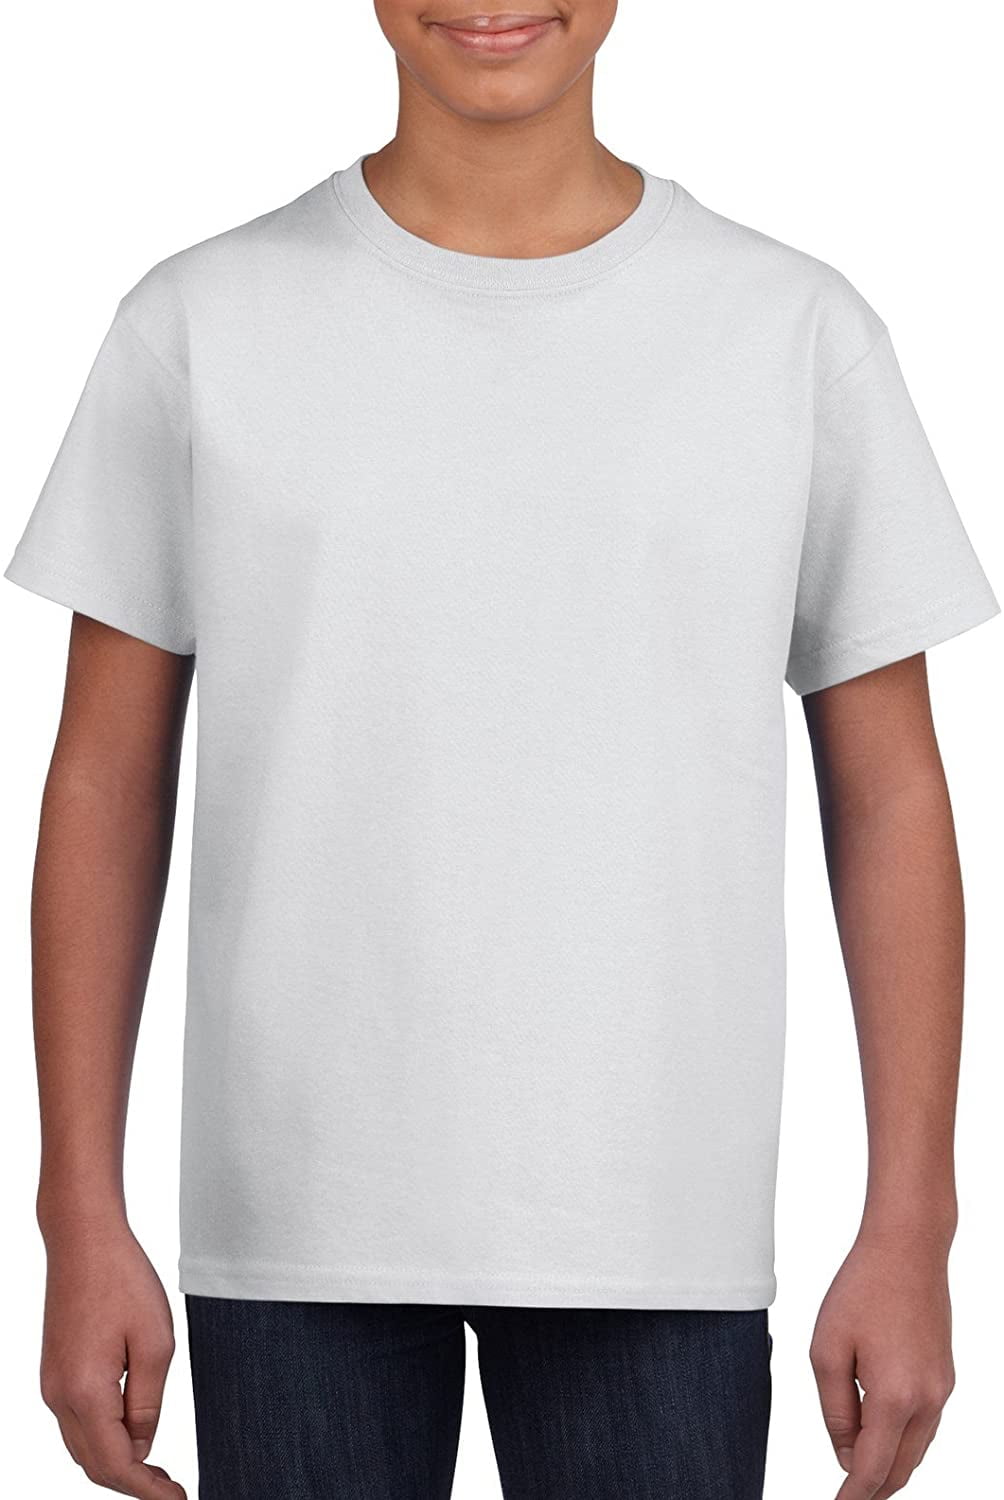 Gildan Kids' Big Ultra Cotton Youth T-Shirt, 2-Pack, White, X-Large ...